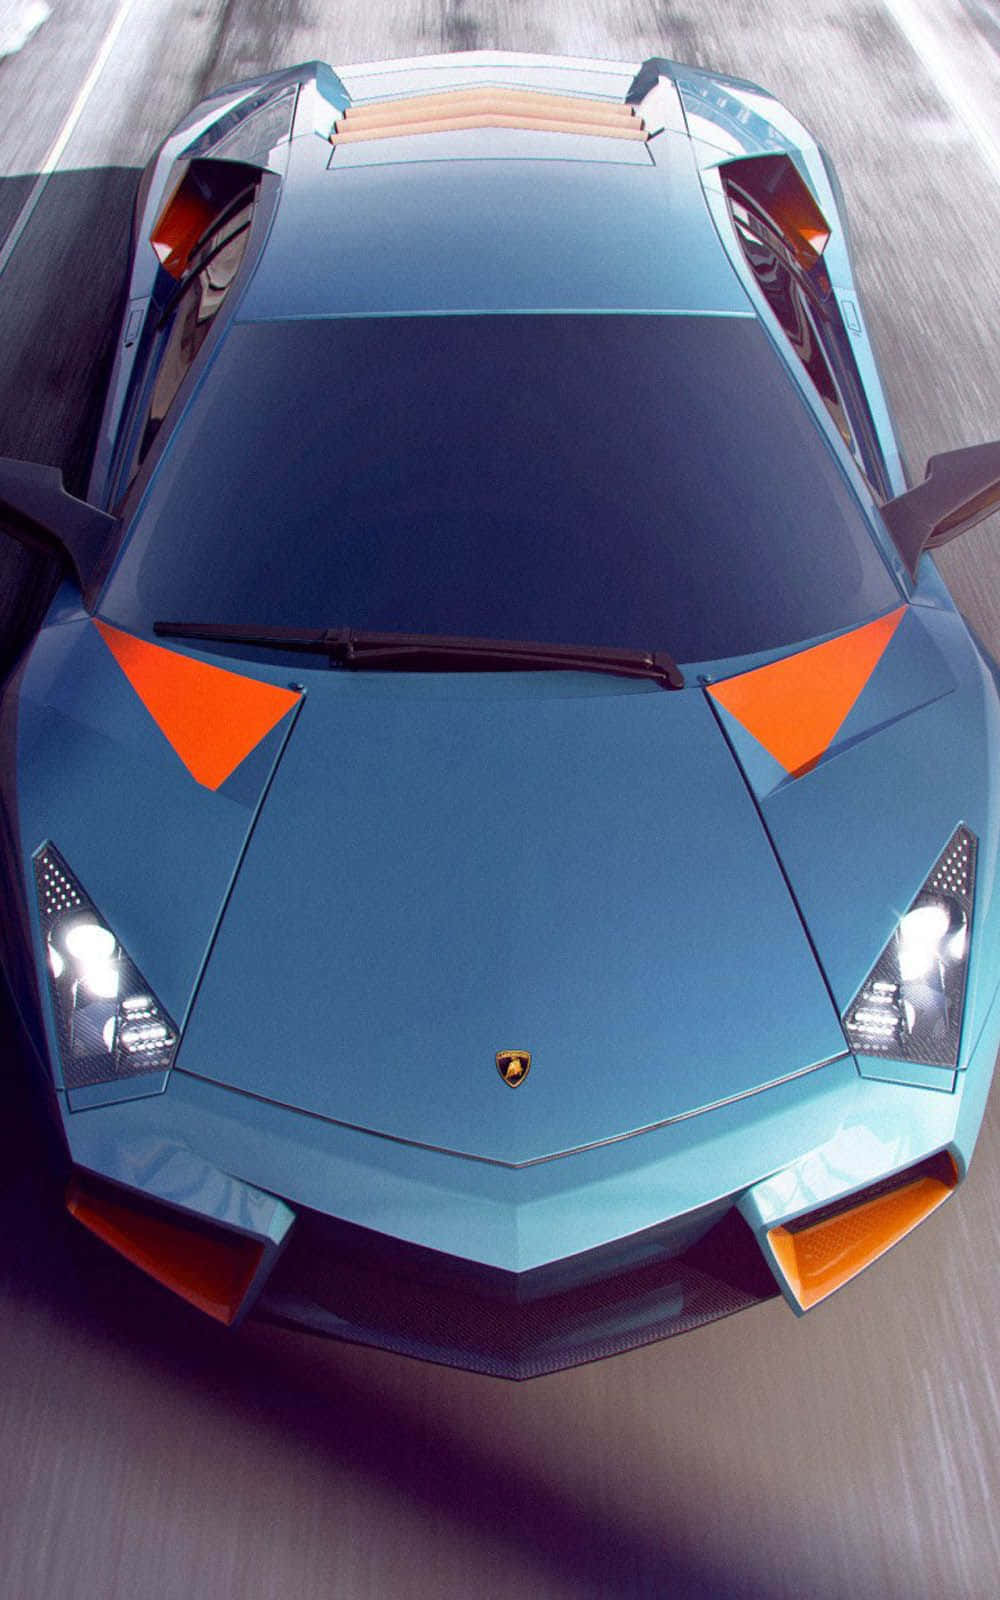 The Lamborghini Aventador: Luxury, Power, and Style